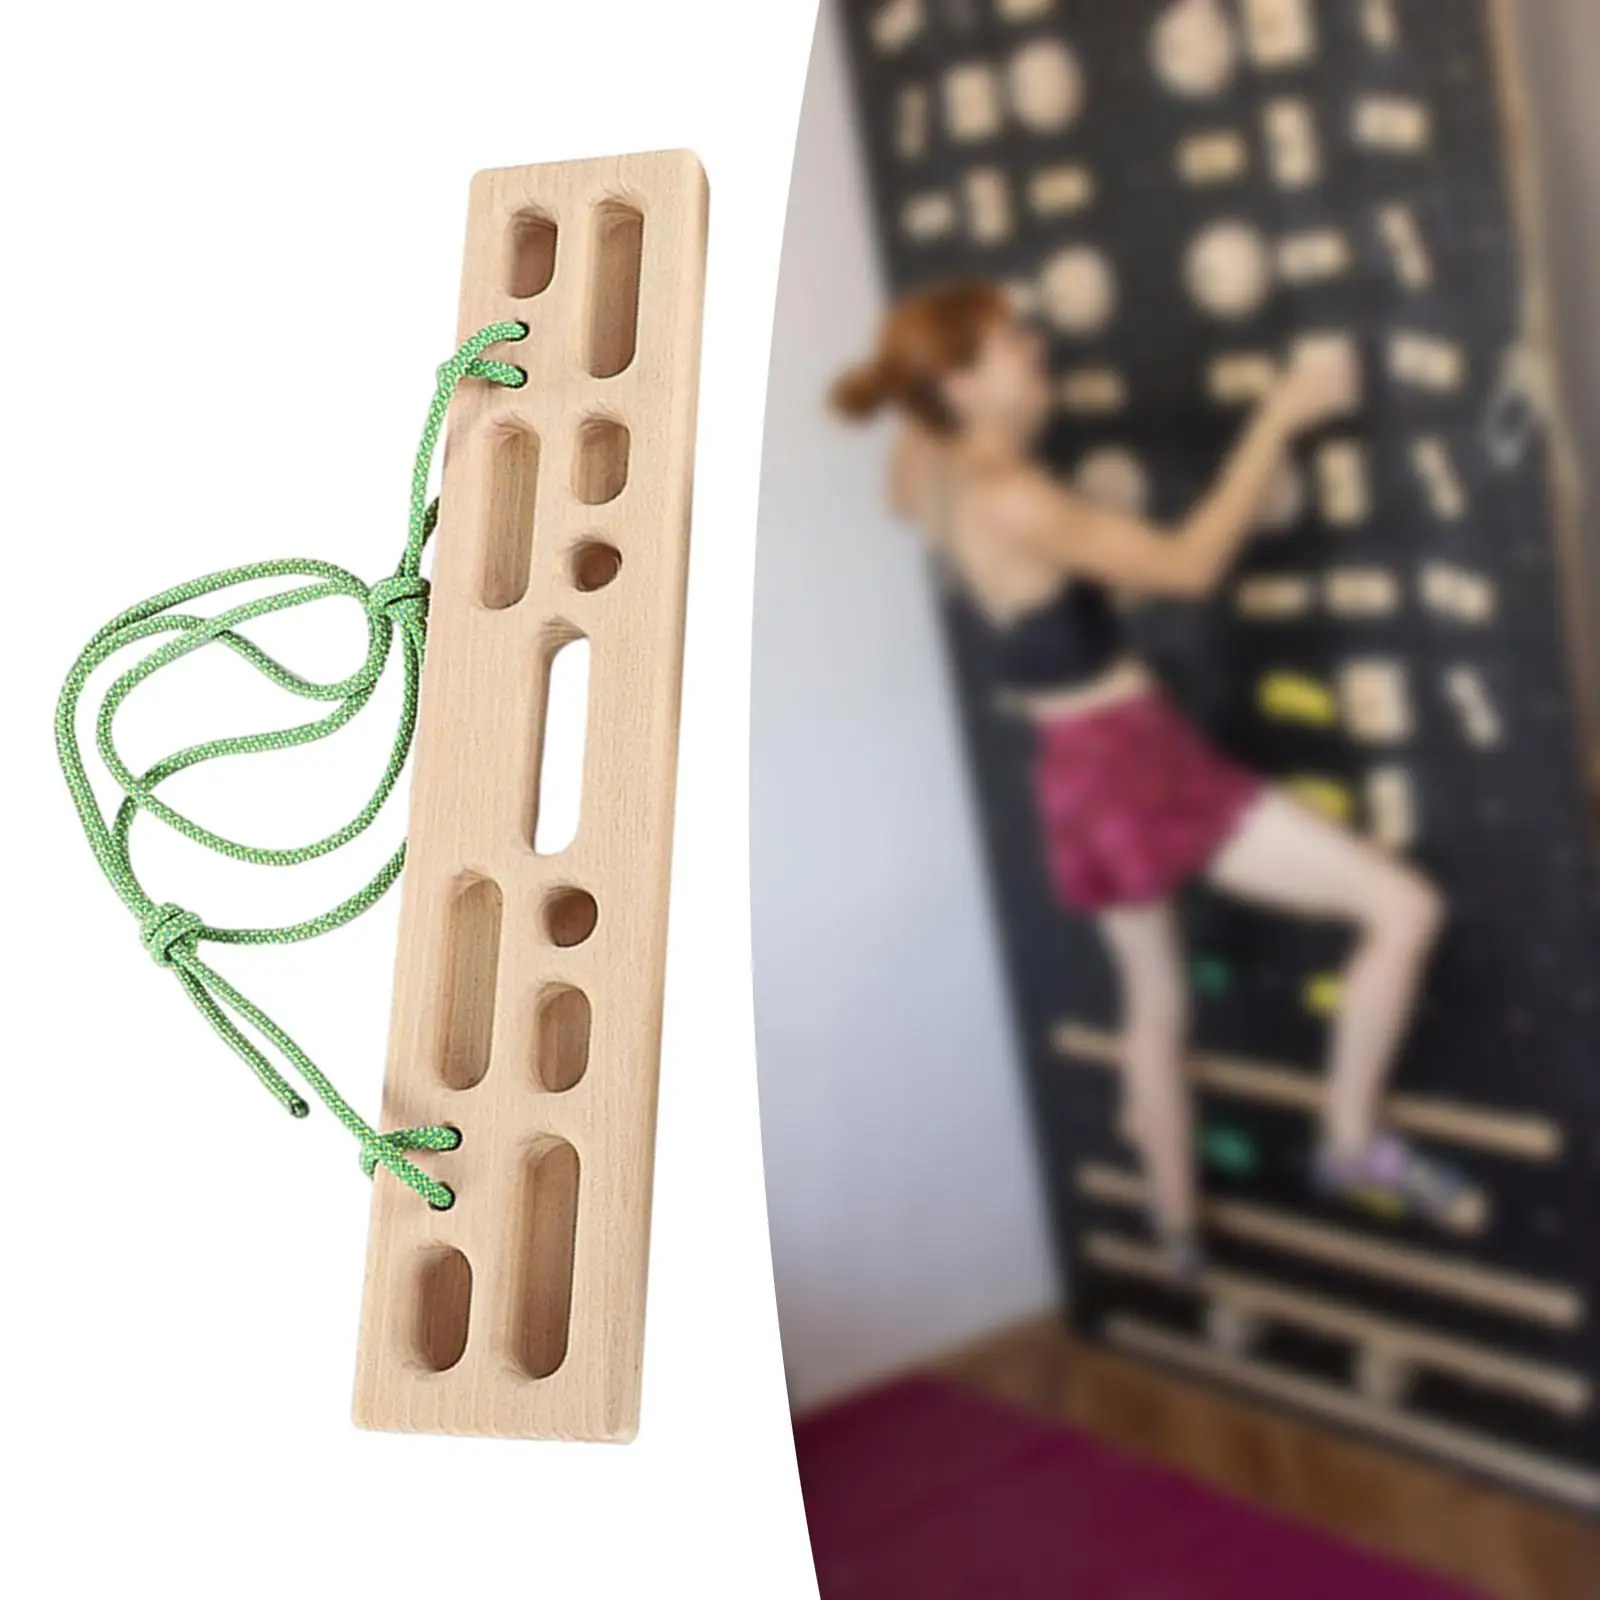 Climbing Hangboard Climbing Fingerboard Building Core Strength Wooden Hang Board for Athletes Wall Outdoor Bouldering Doorway